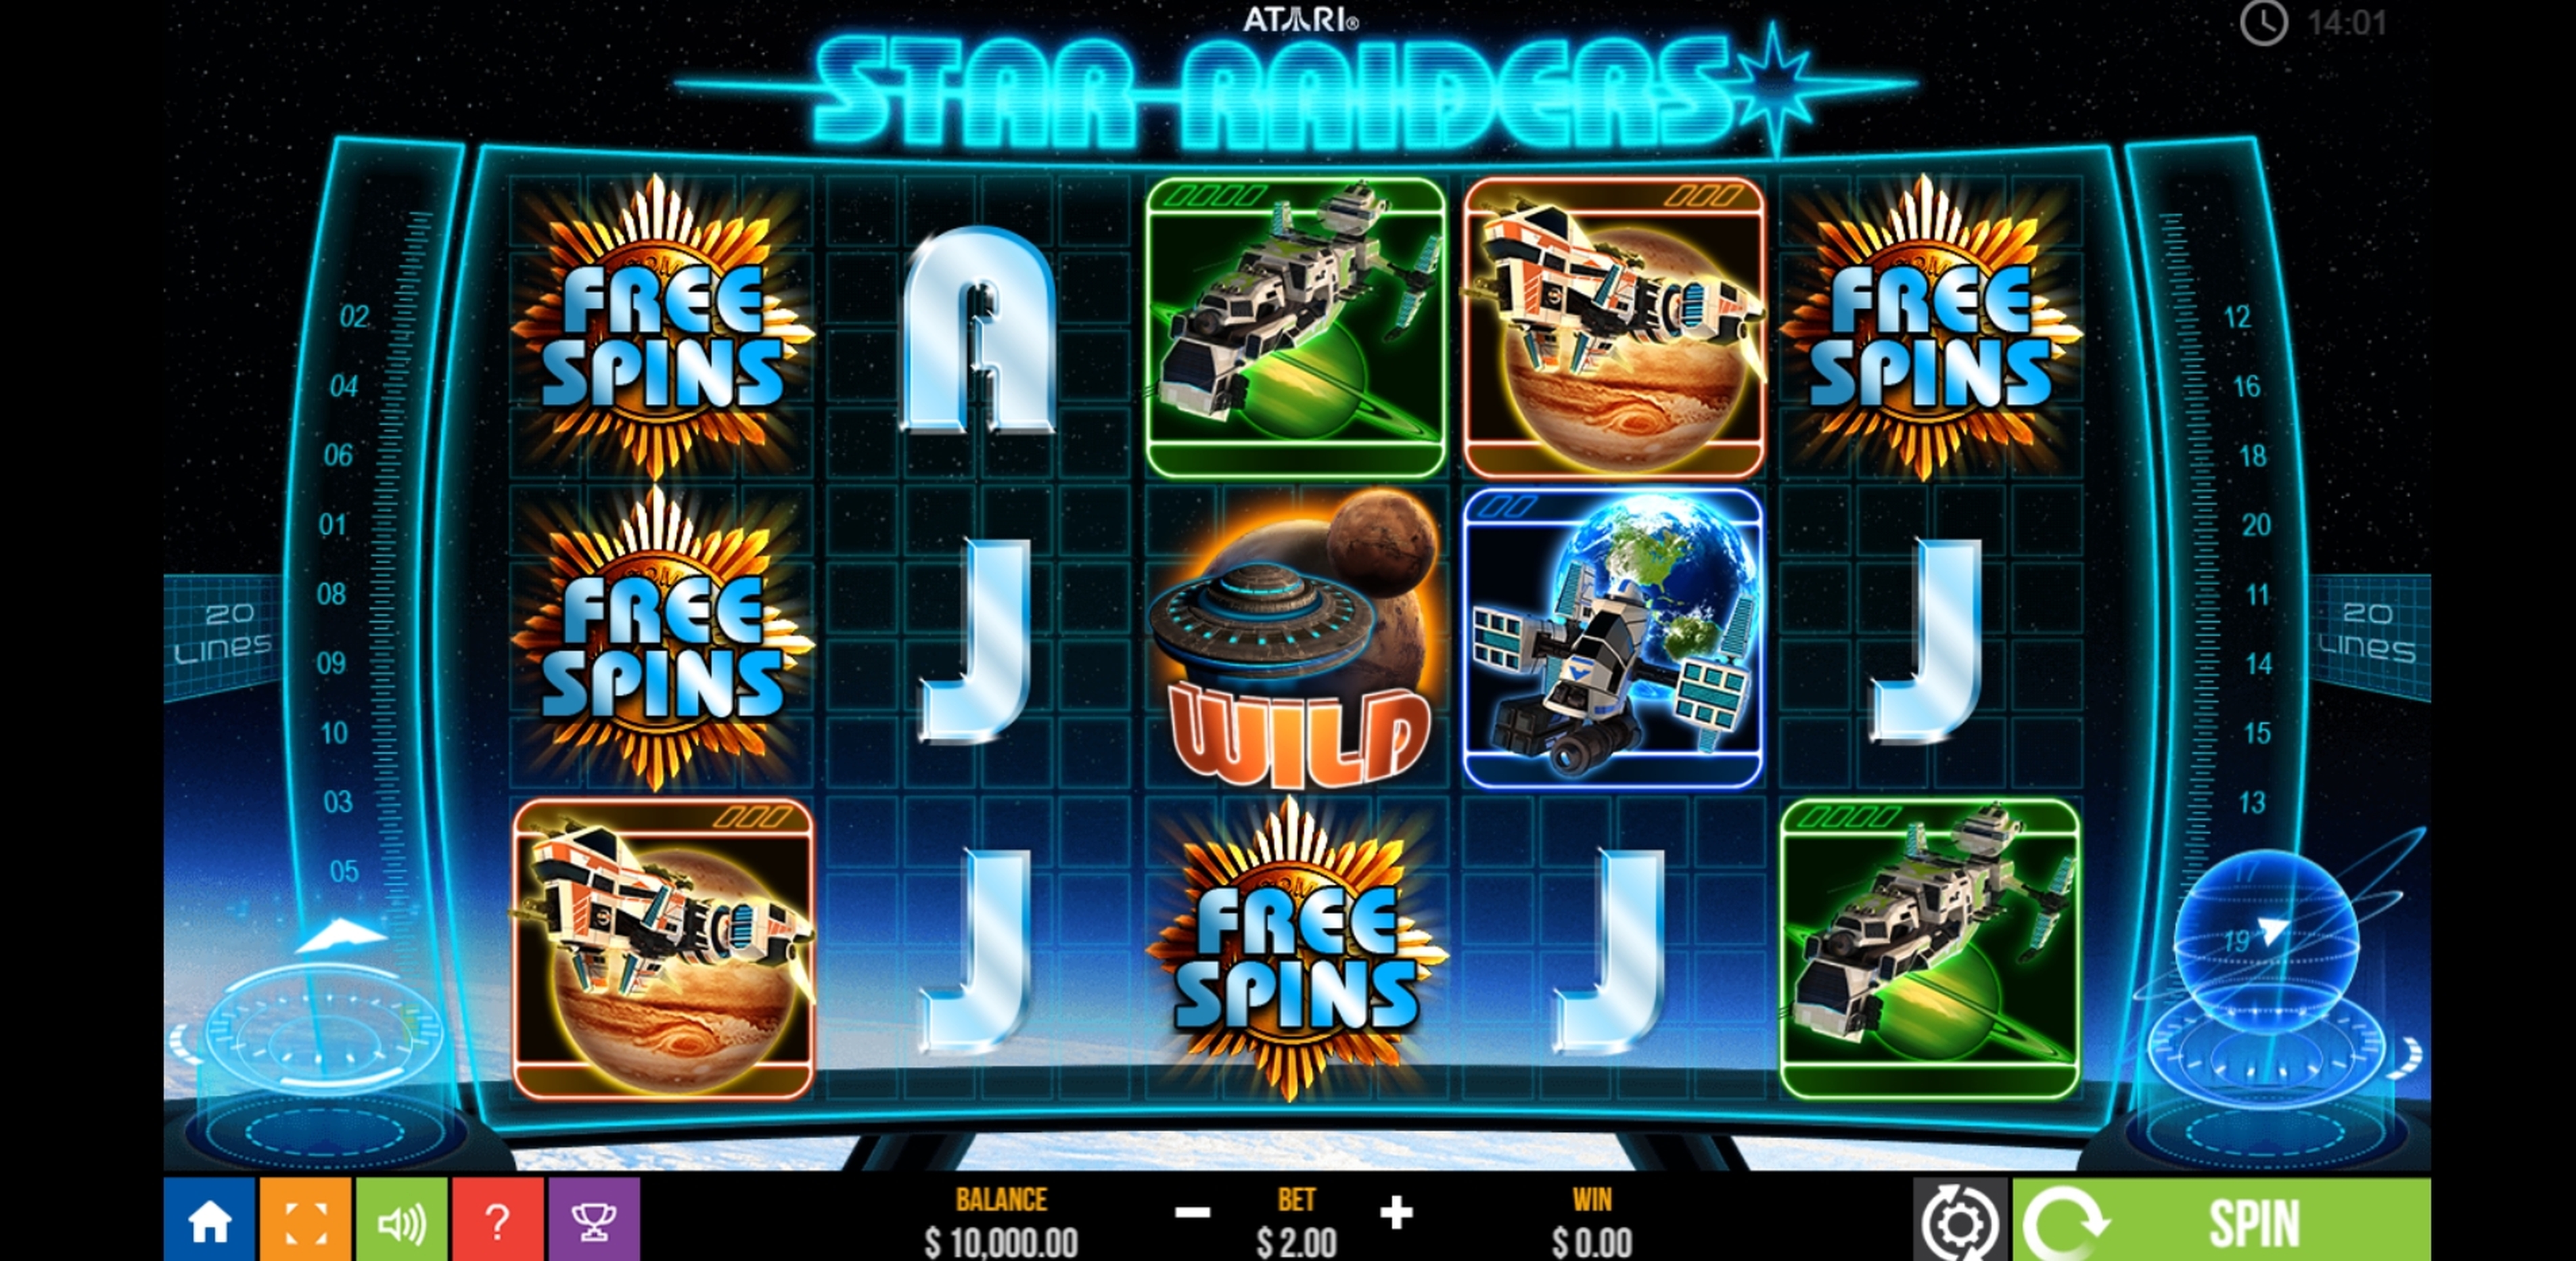 Win Money in Star Raiders Free Slot Game by PariPlay